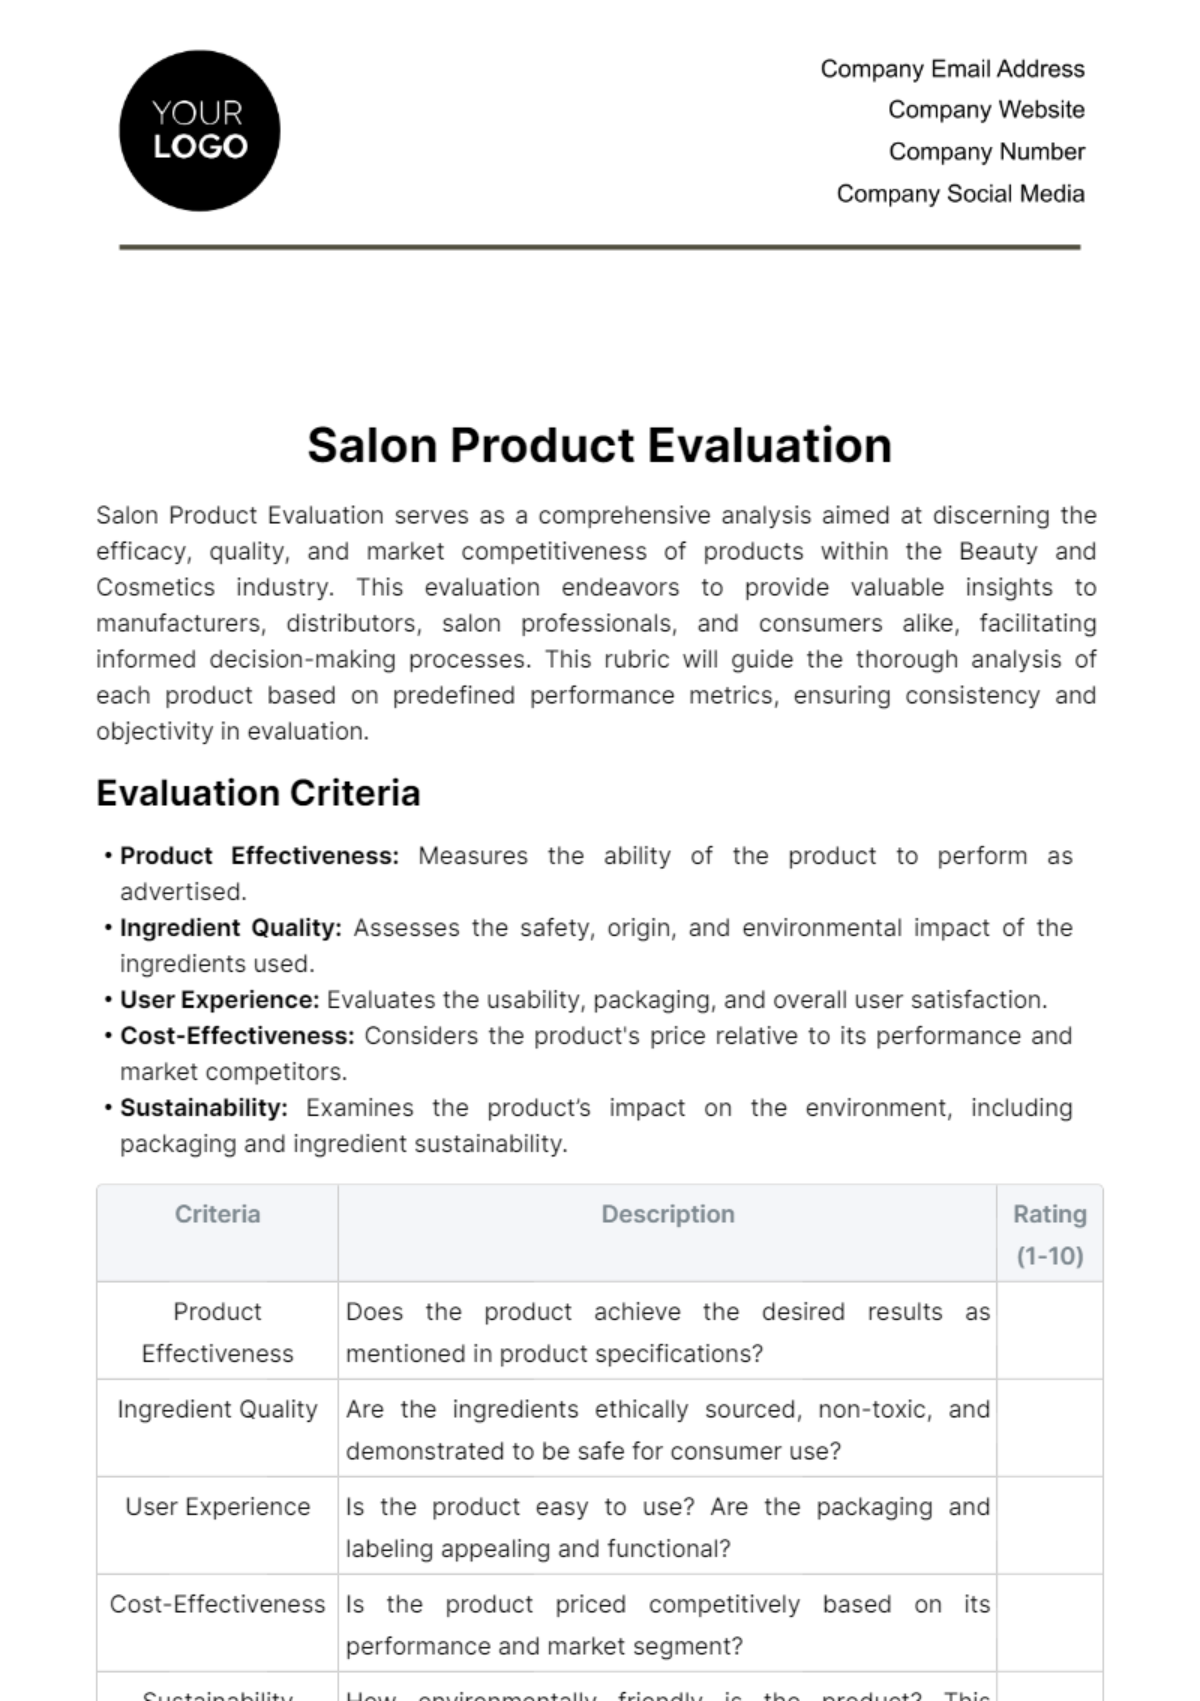 Free Salon Product Evaluation Template